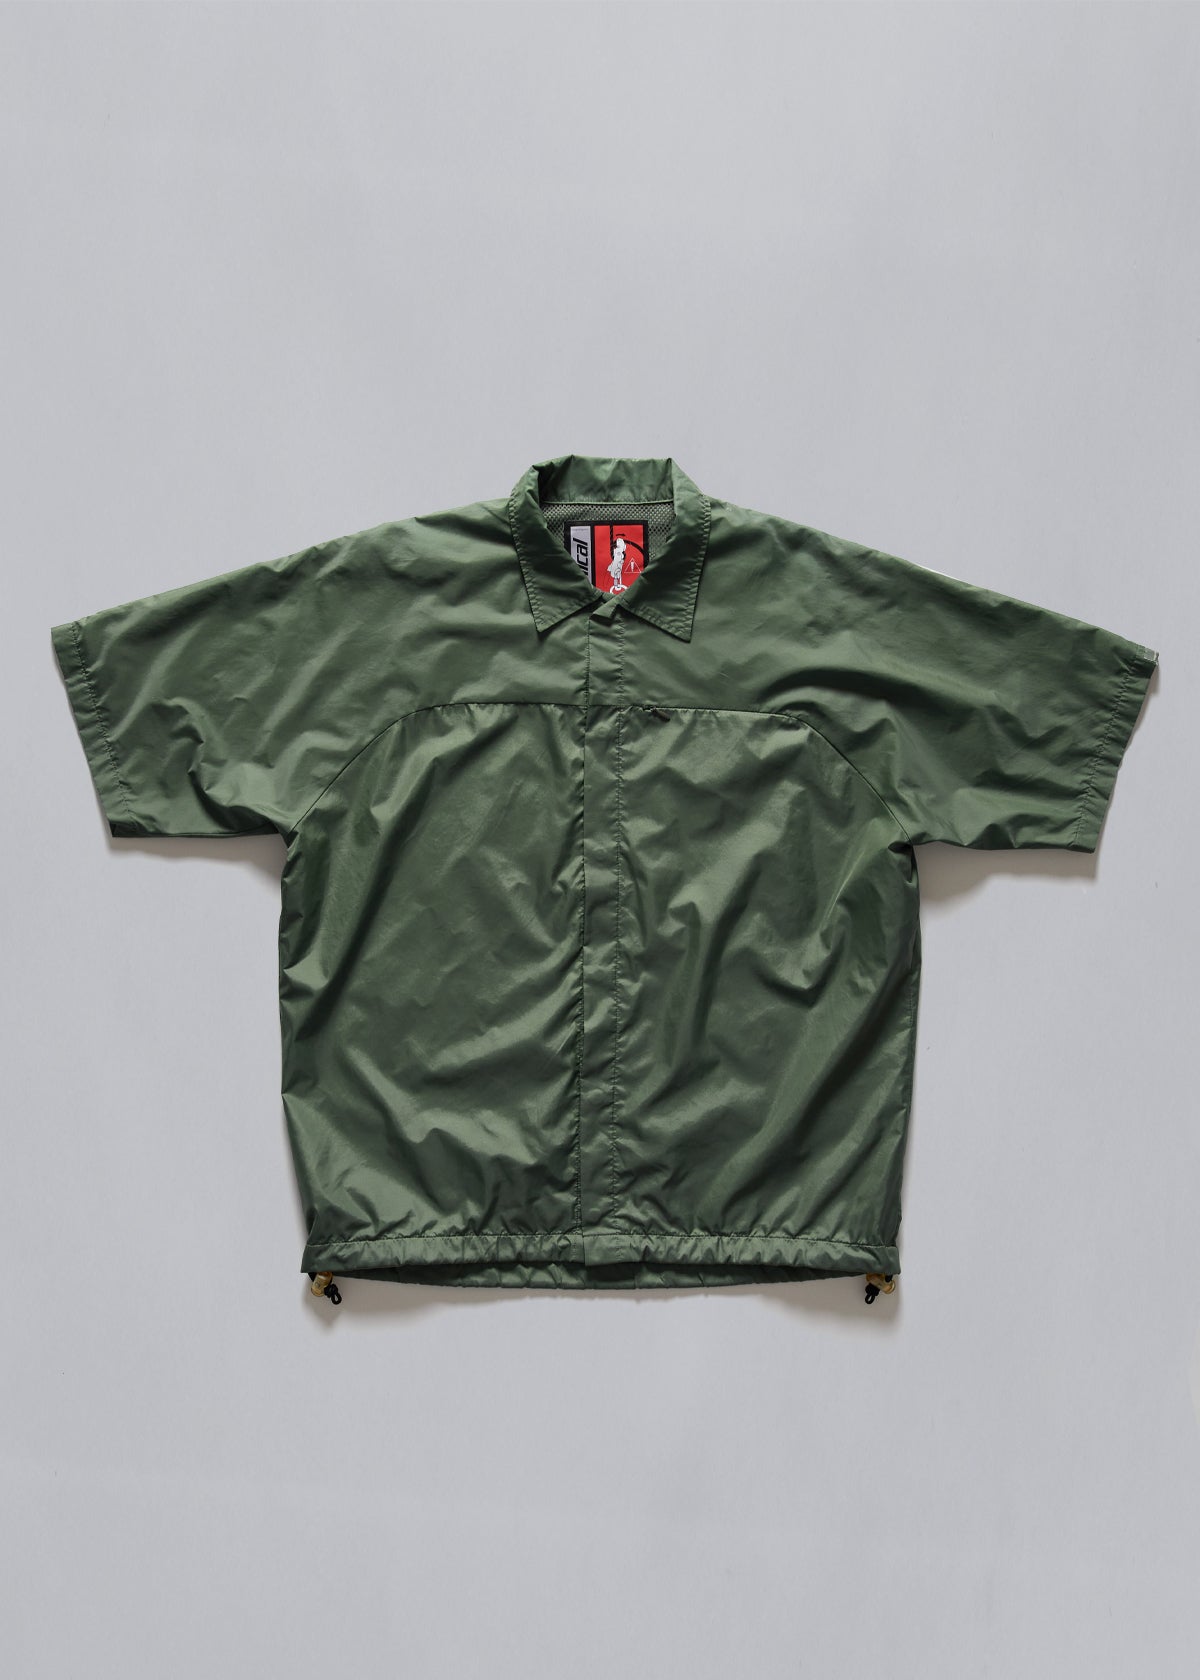 Nylon Tech Shirt 2000's - Medium - The Archivist Store